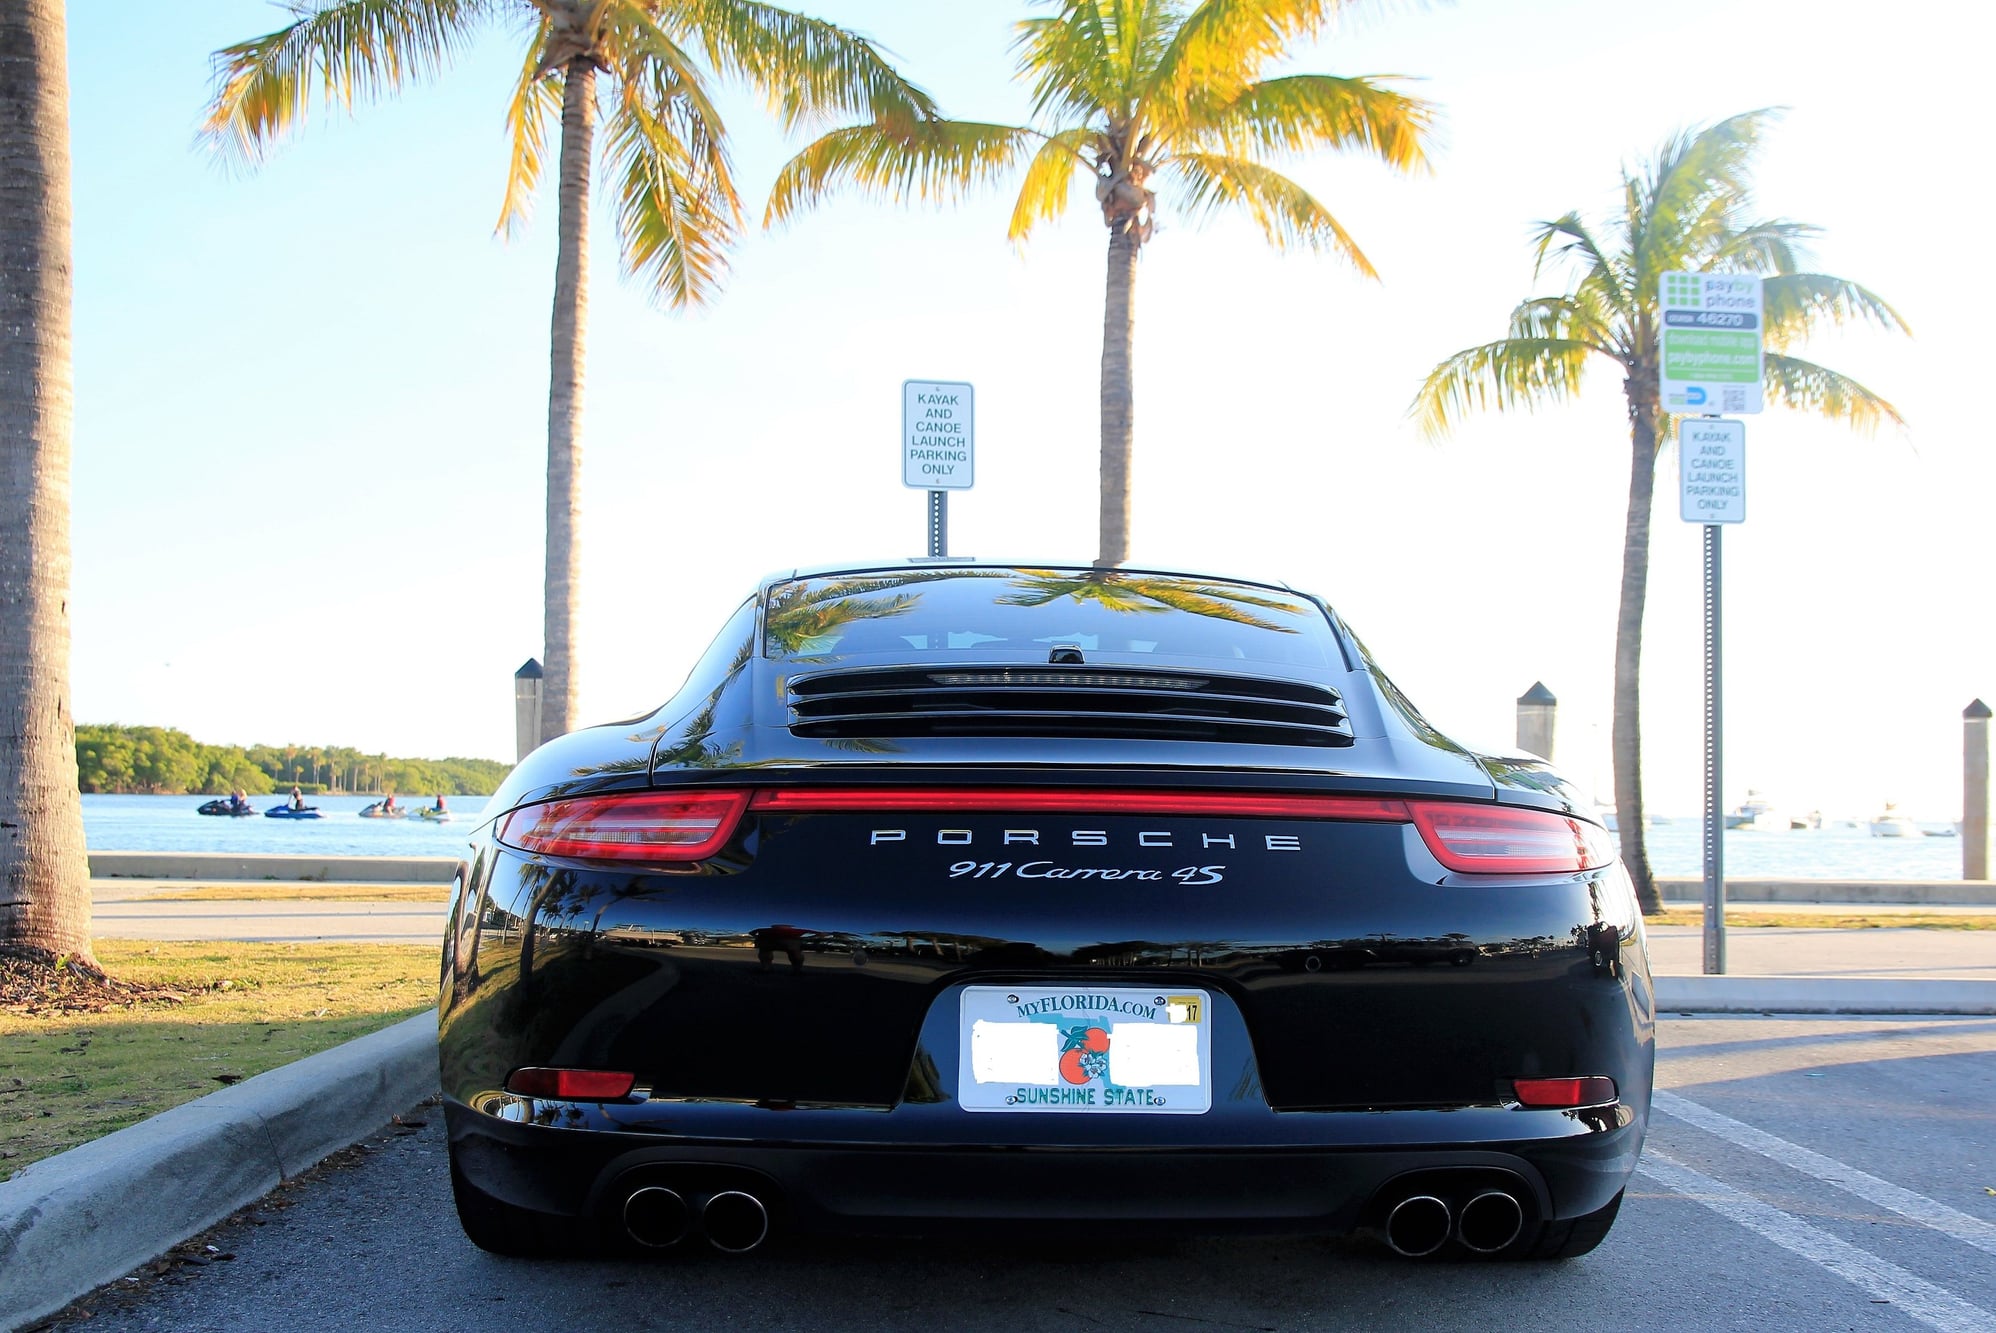 2014 Porsche 911 - 2014 C4S Black/Black FULL LEATHER PDK "sunroof delete" (34k m / 6 m of CPO warranty) - Used - VIN WP0AB2A97ES121563 - 33,600 Miles - 6 cyl - AWD - Automatic - Coupe - Black - Miami, FL 33131, United States